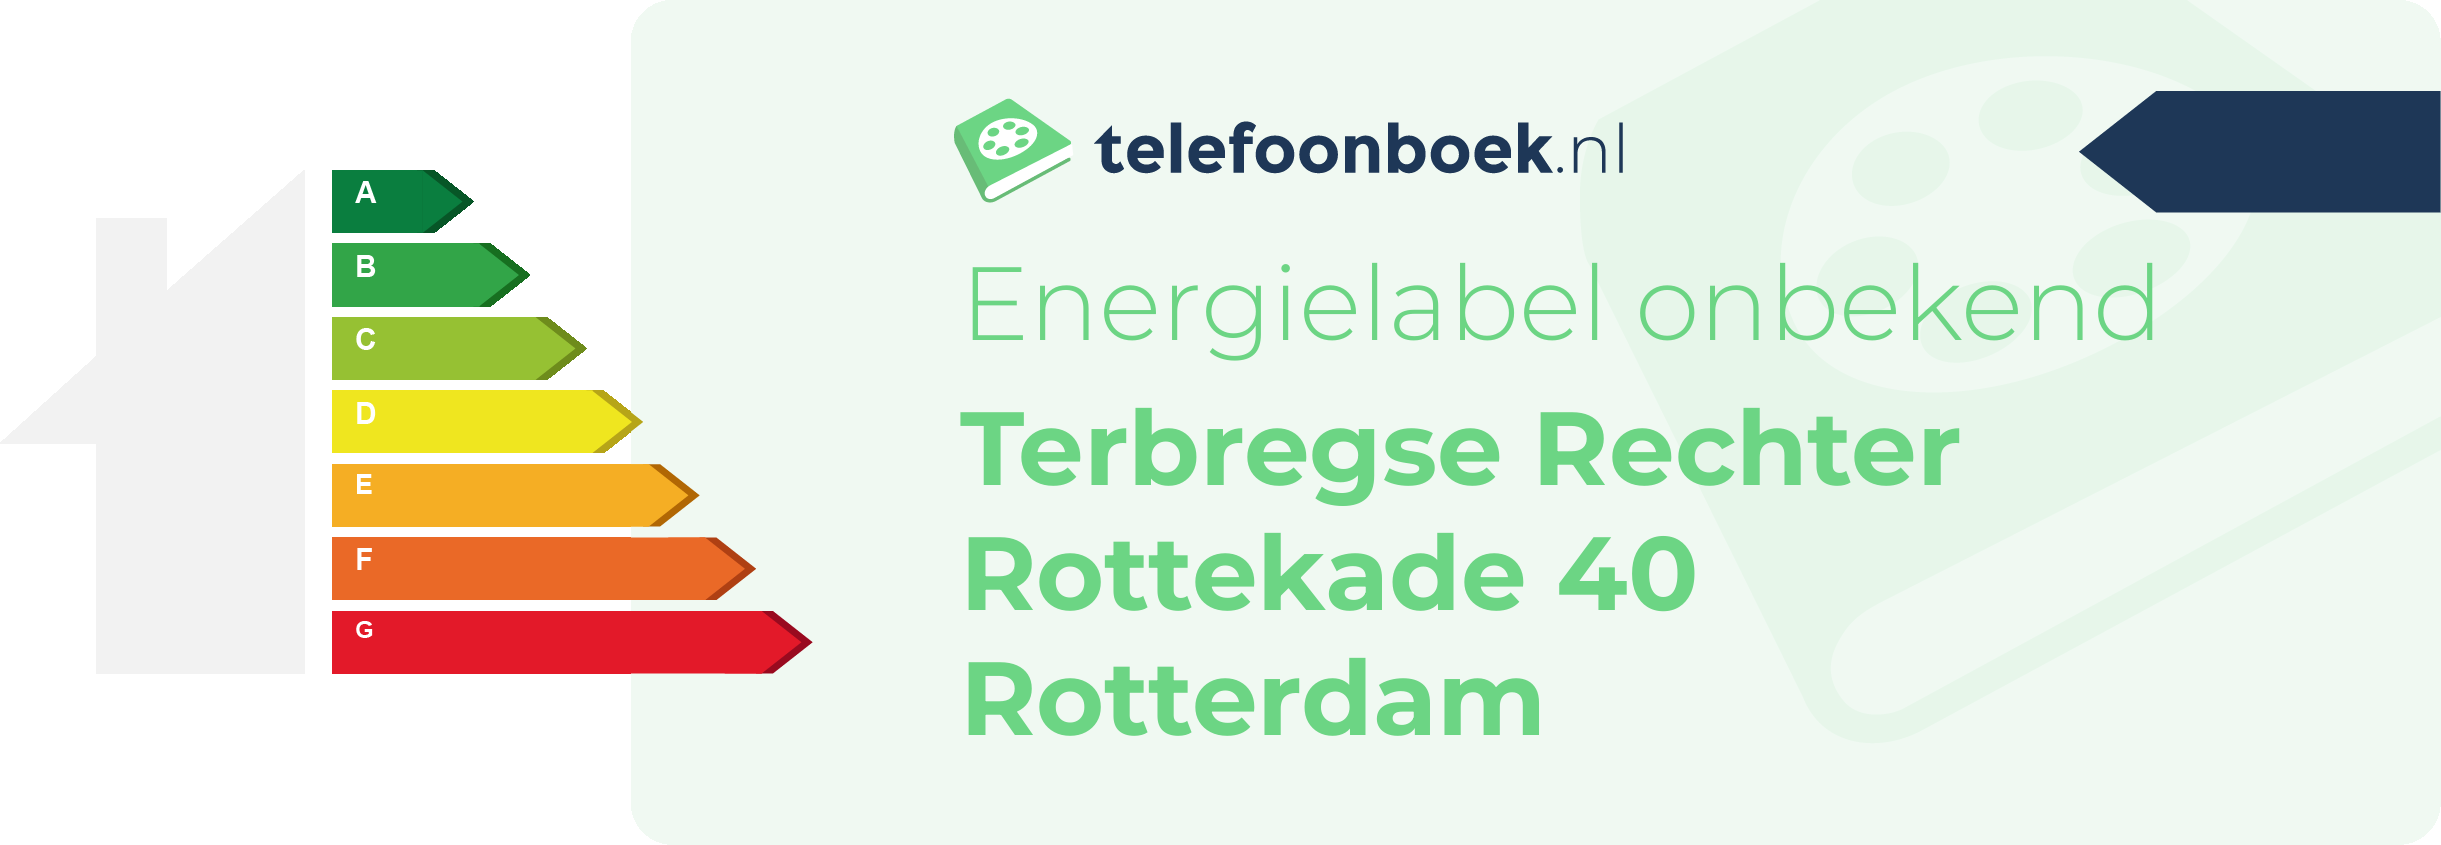 Energielabel Terbregse Rechter Rottekade 40 Rotterdam